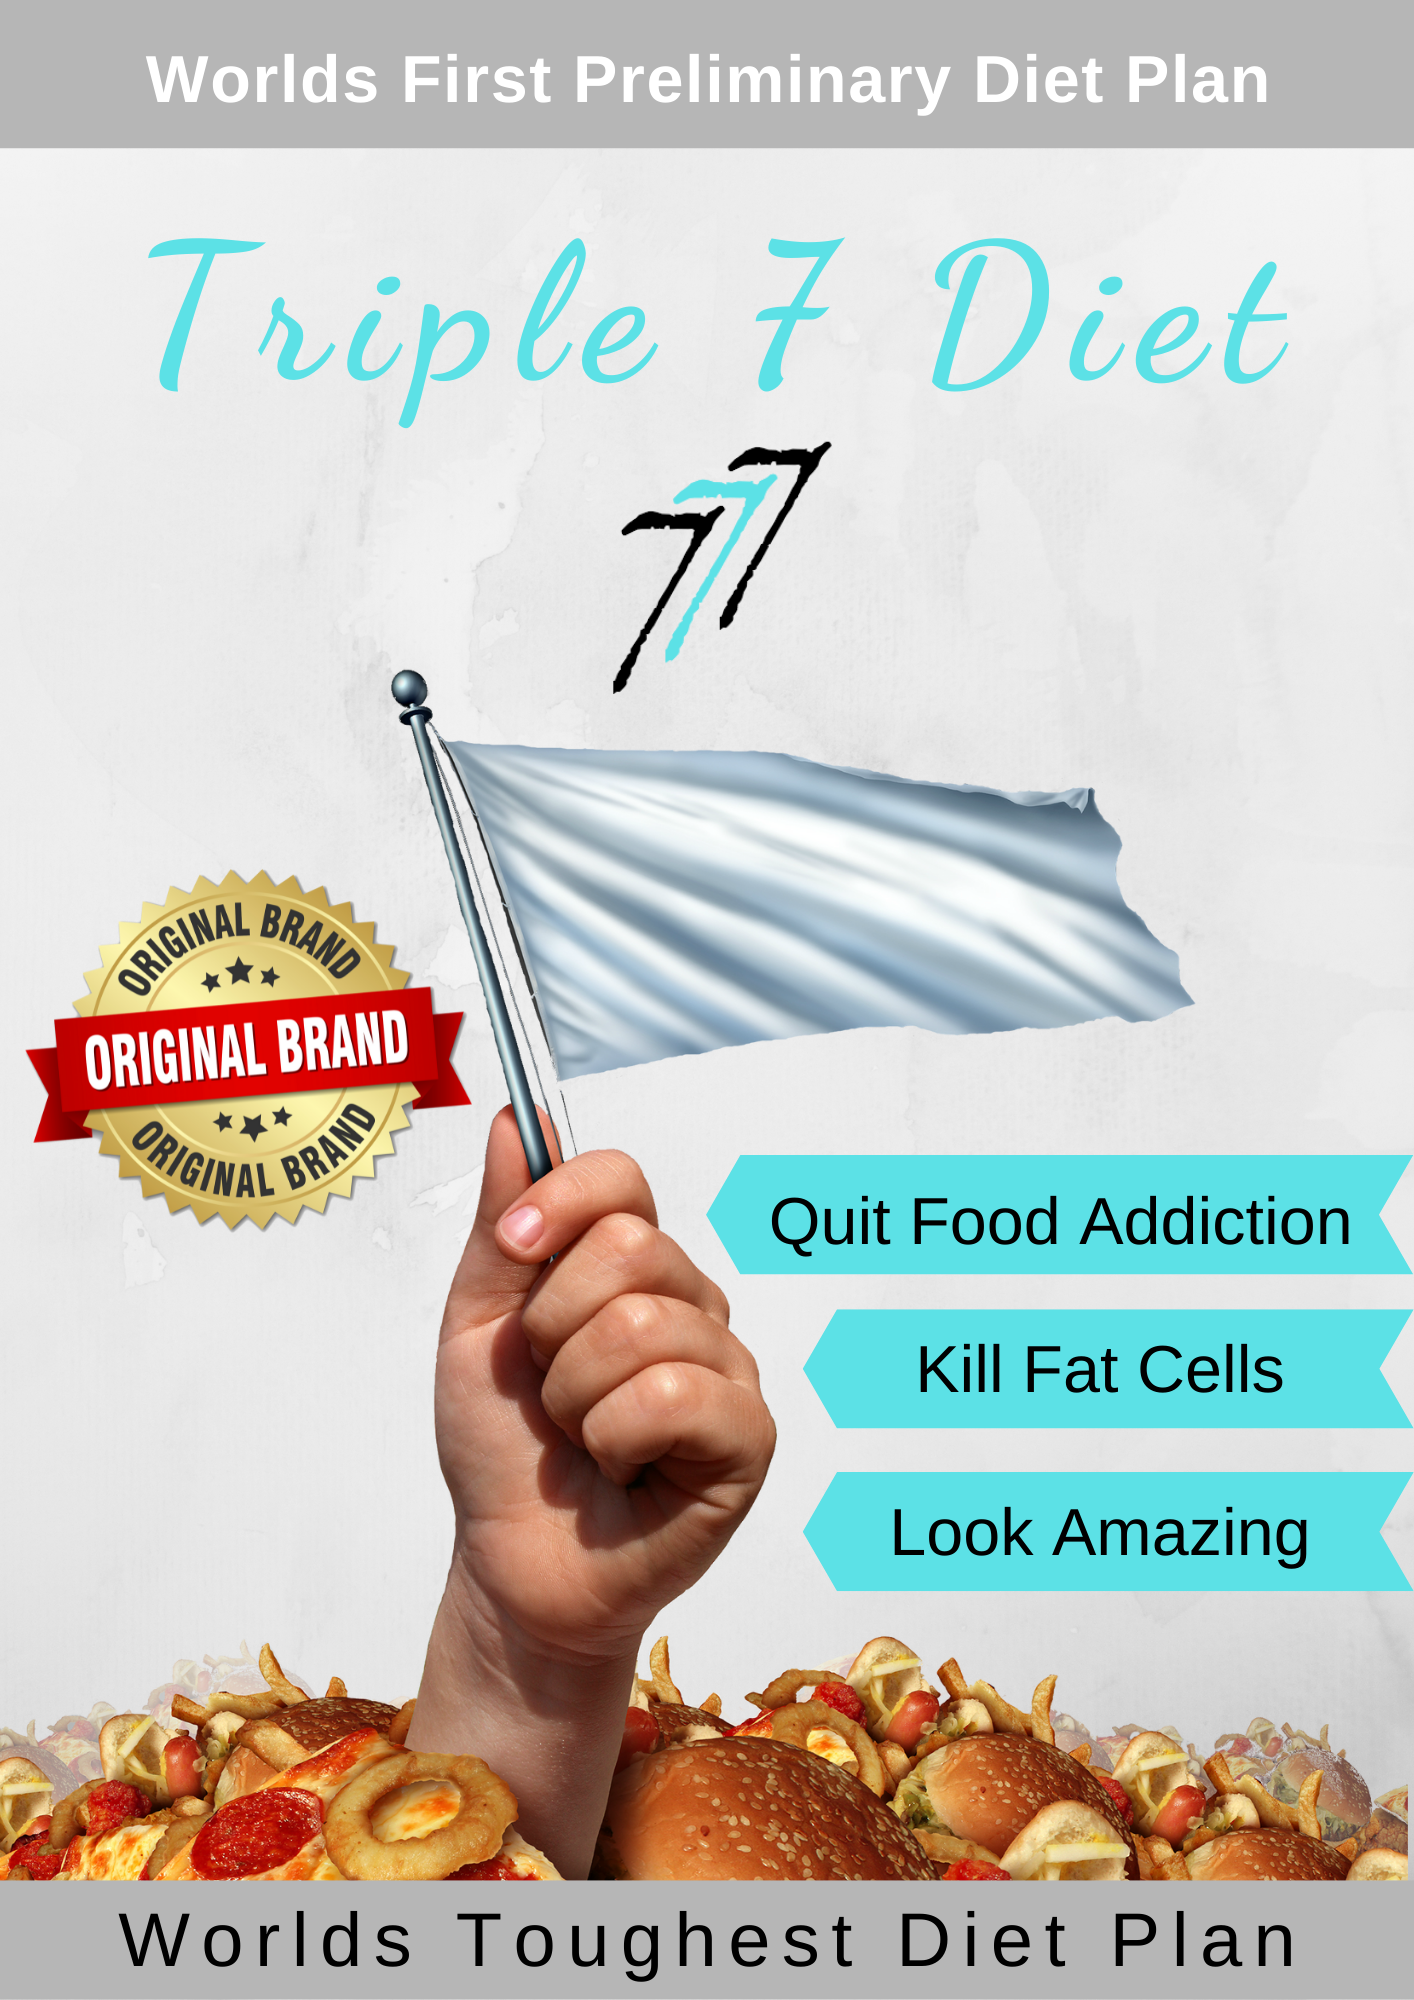 Triple 7 Diet (Fasting & Cleansing Plan)